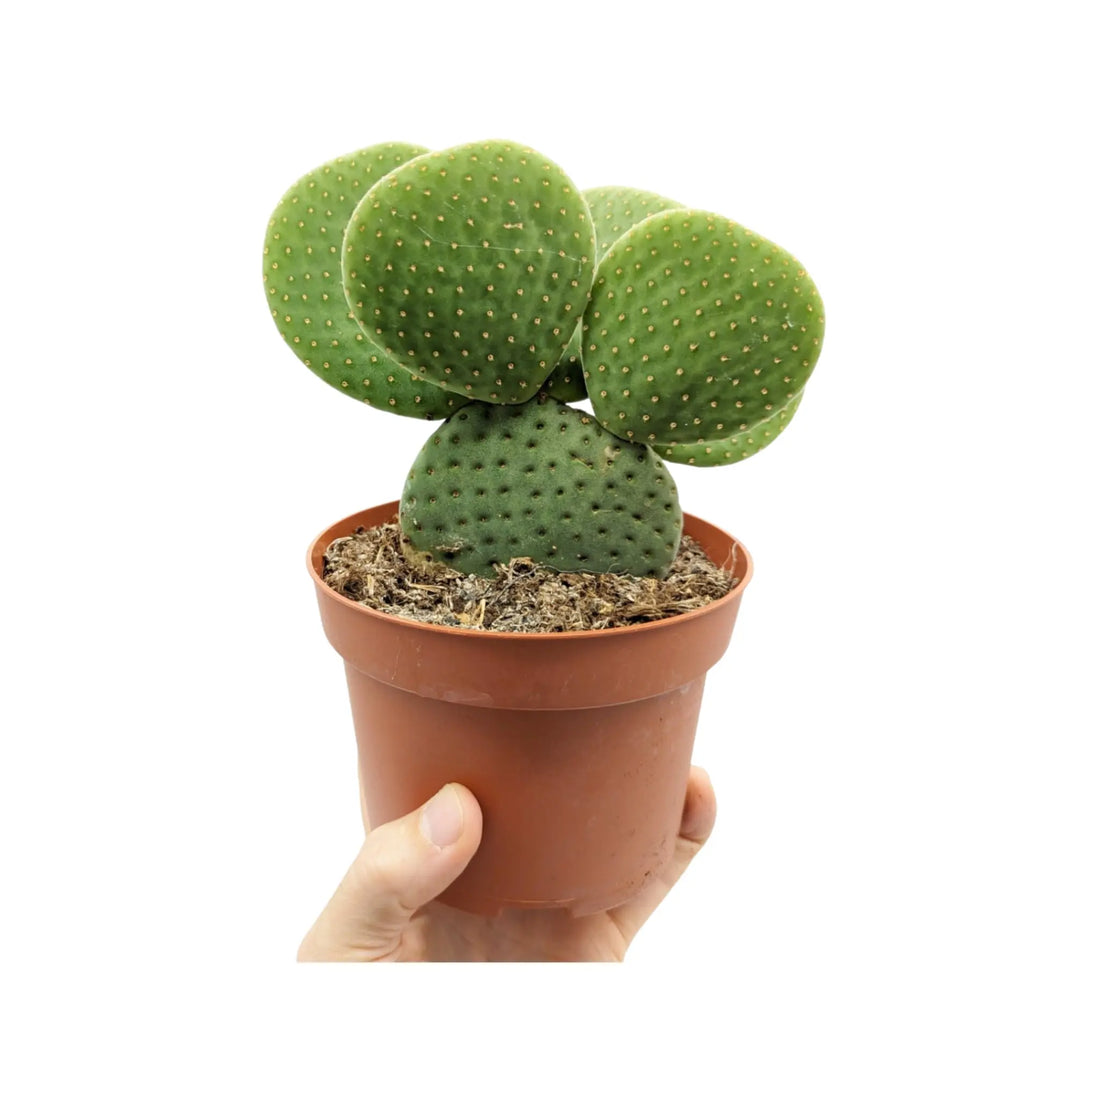 Opuntia Micro Inermis - Bunny Ear Cactus Leaf Culture